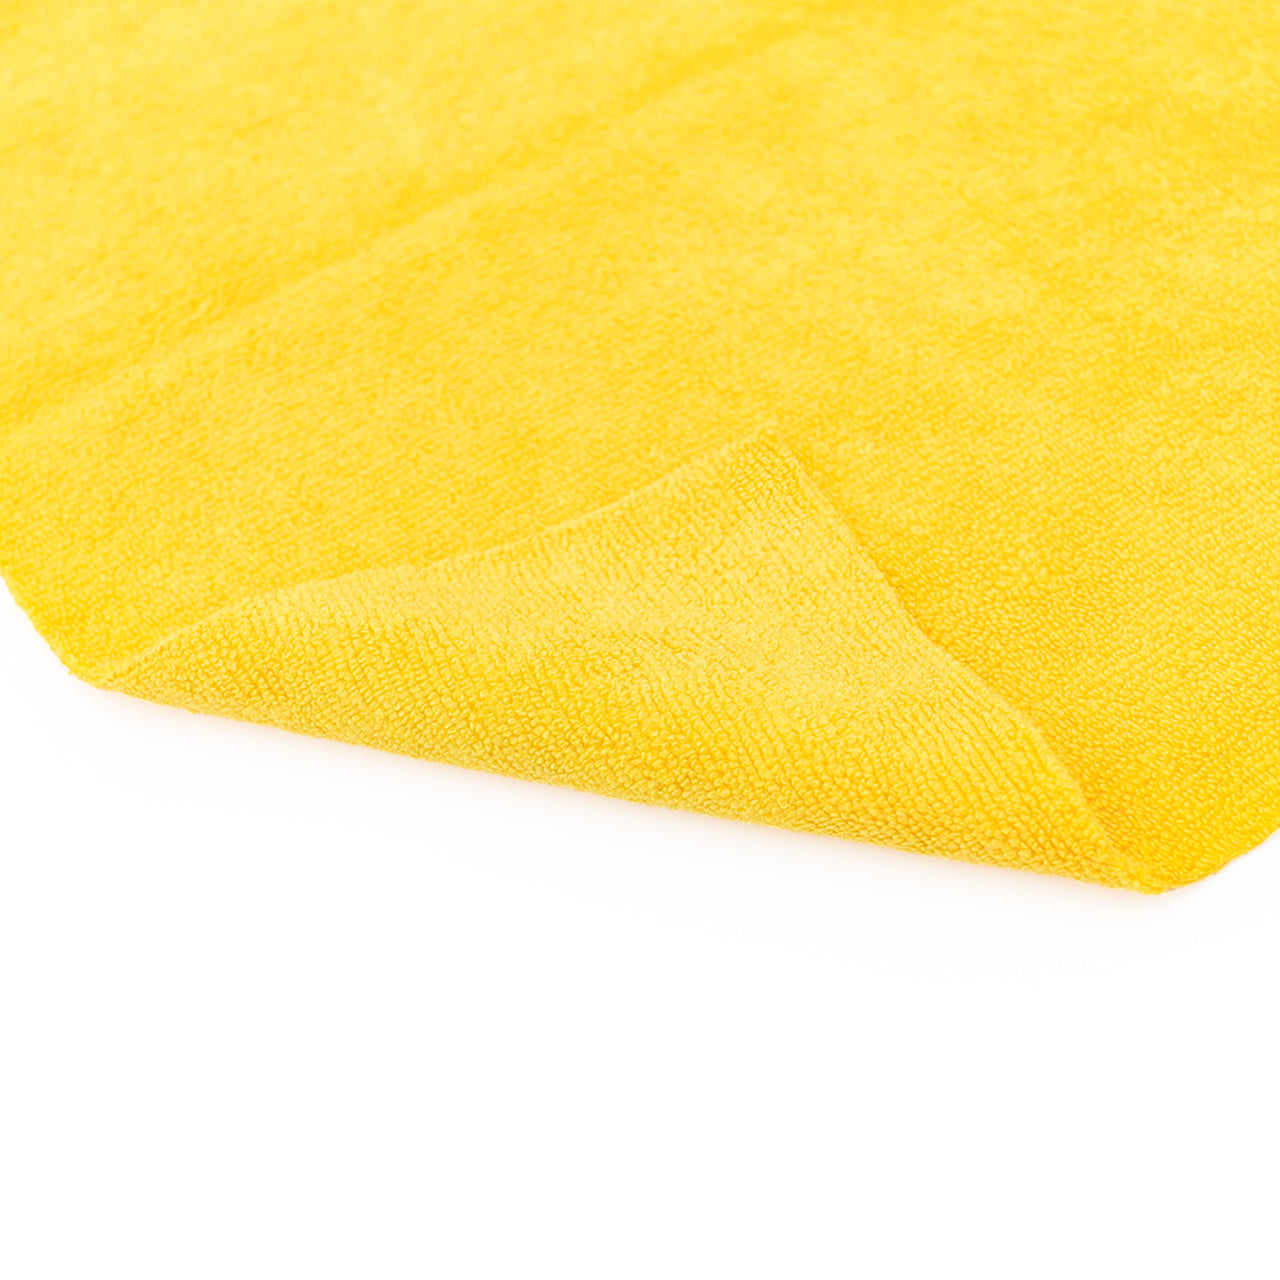 The Rag Company 365 Premium 16X16 Microfiber Terry Towel-Gold